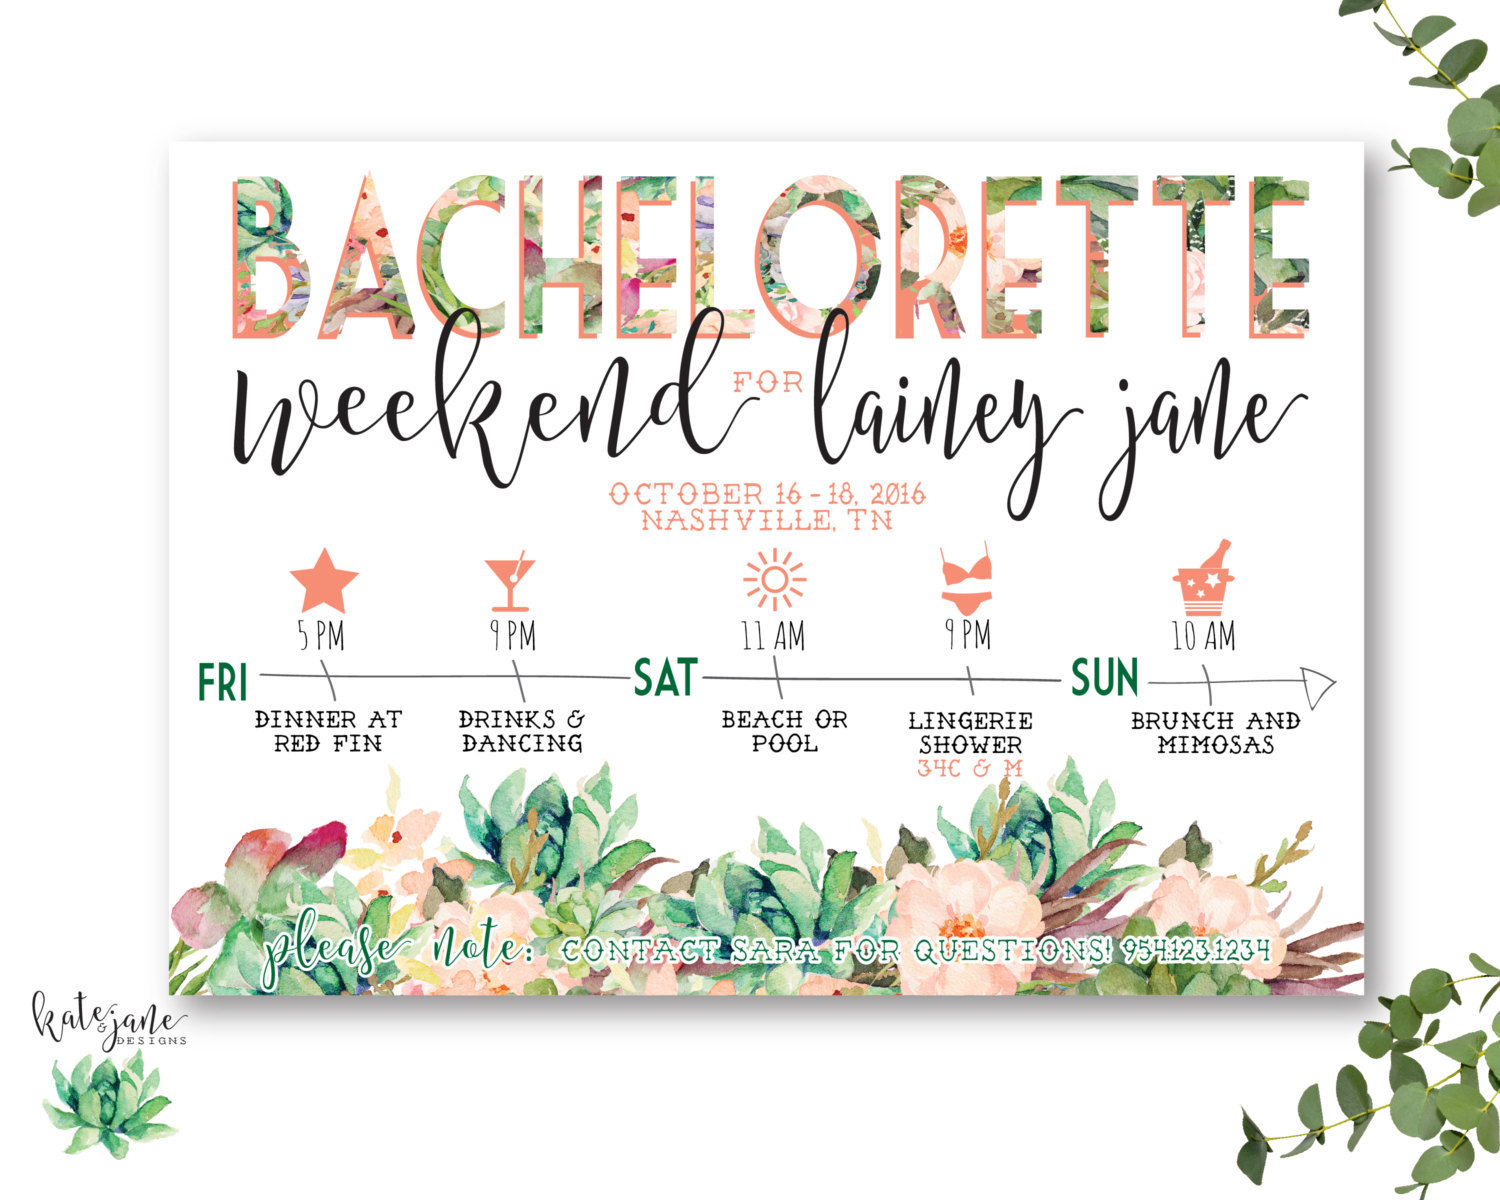 Bachelorette Weekend Invitations 7